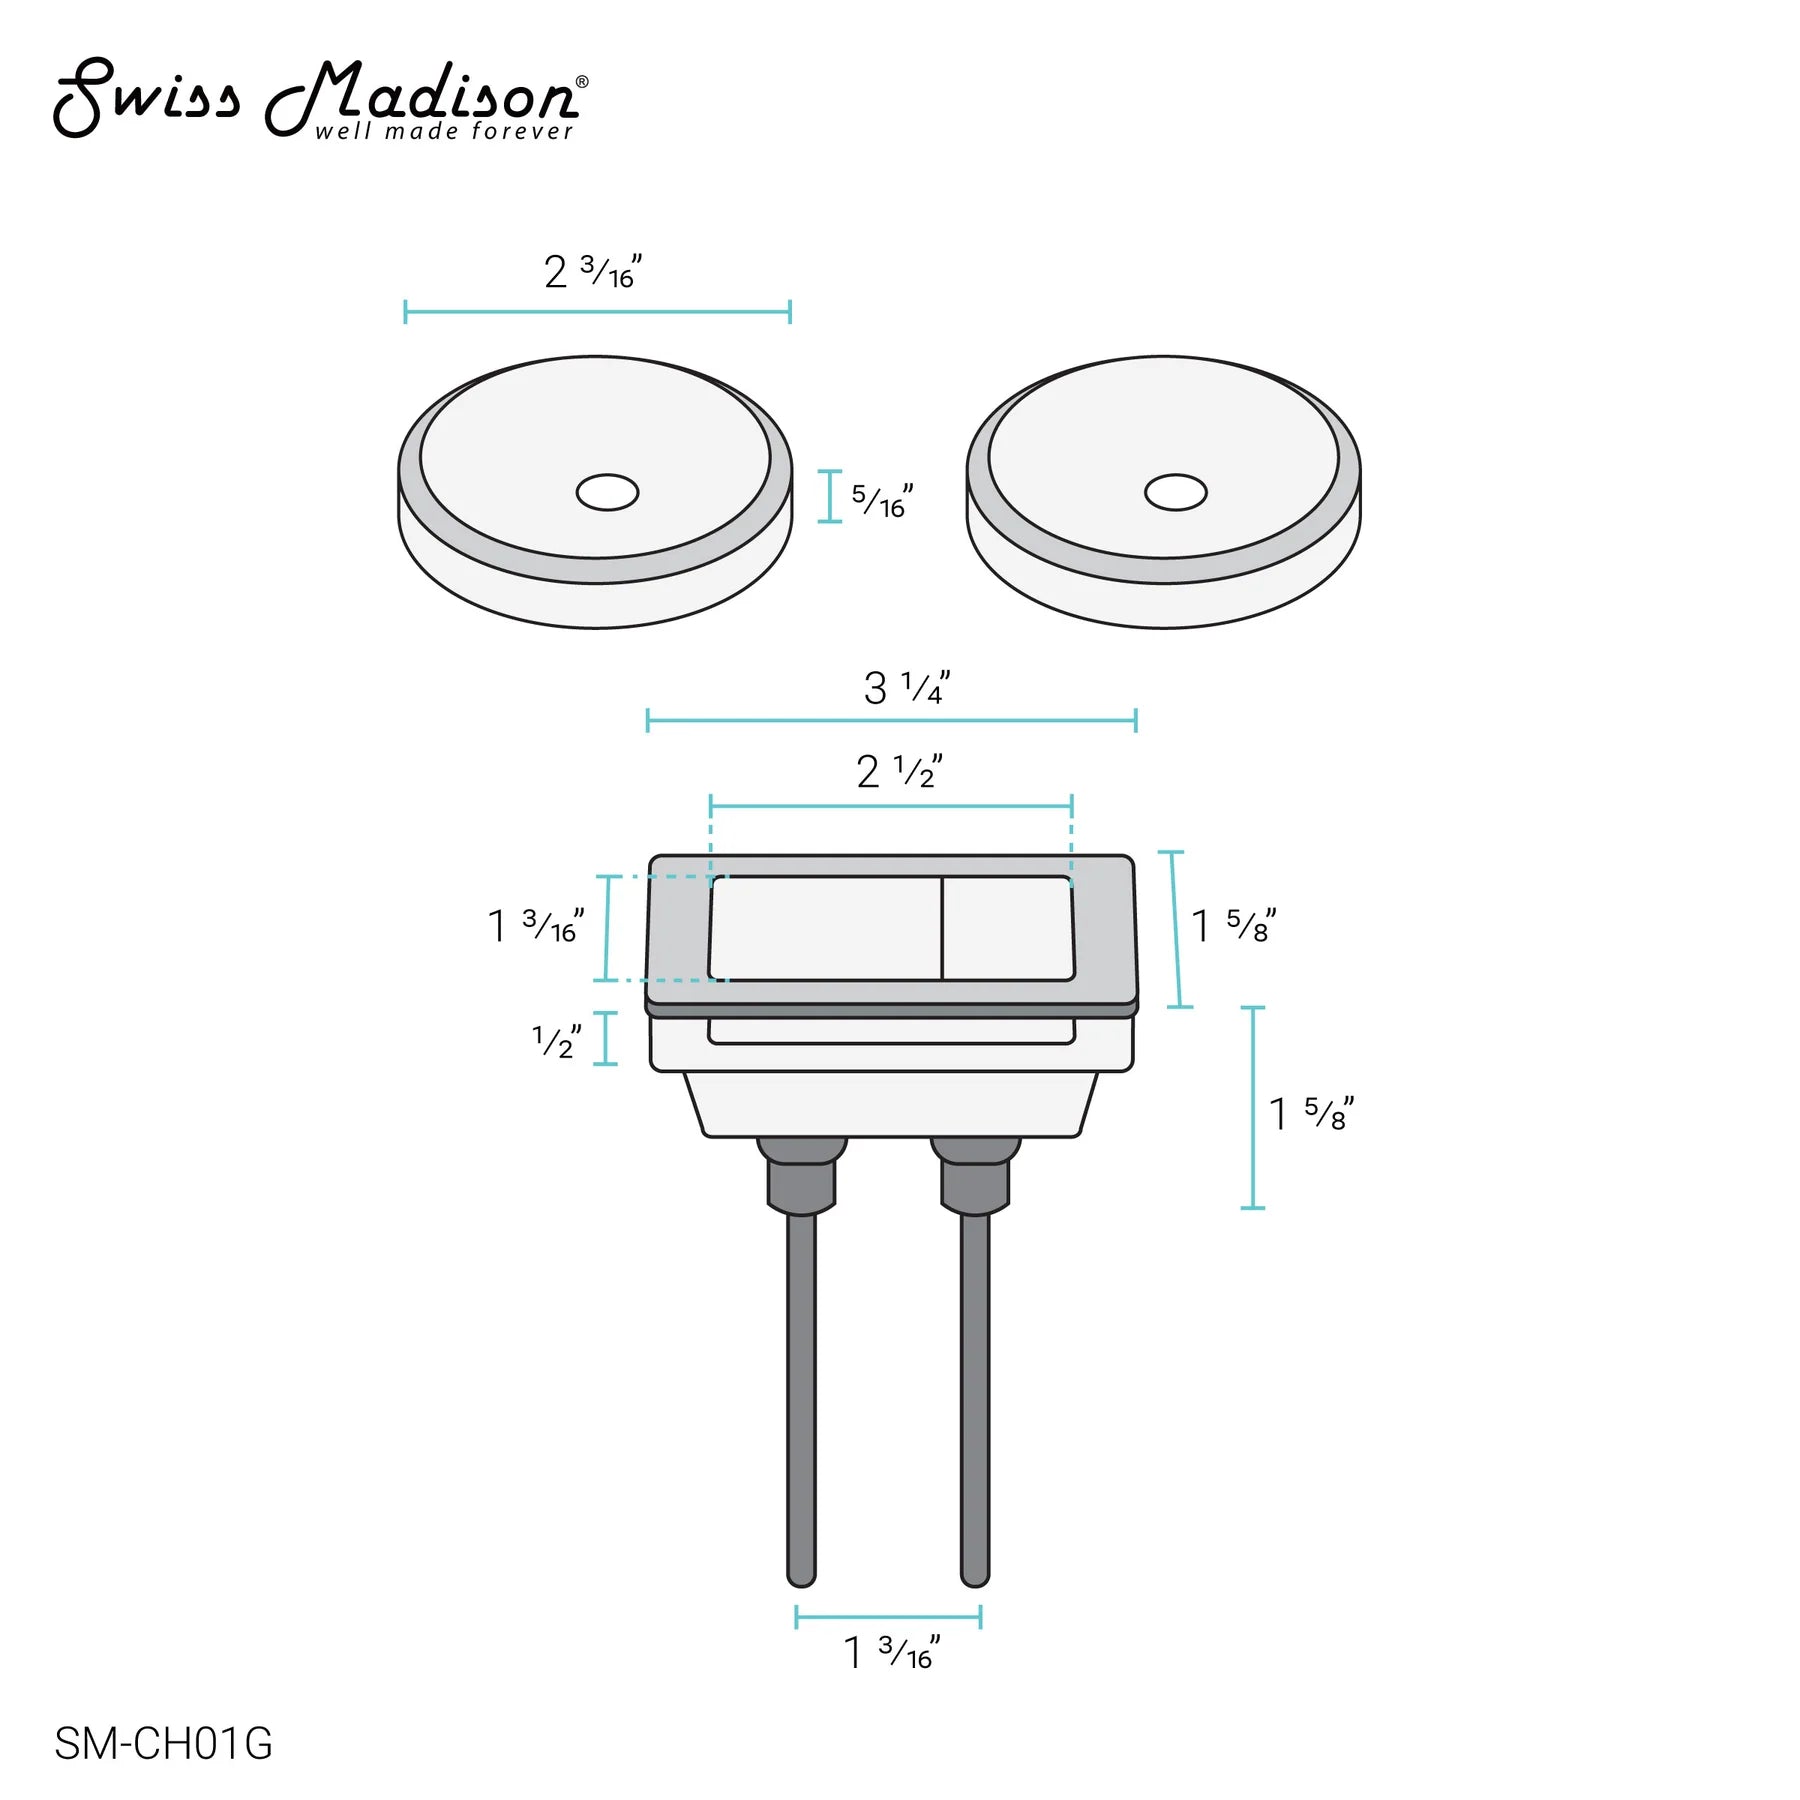 Swiss Madison Toilet Hardware (SM-1T106, SM-1T117) - SM-CH01